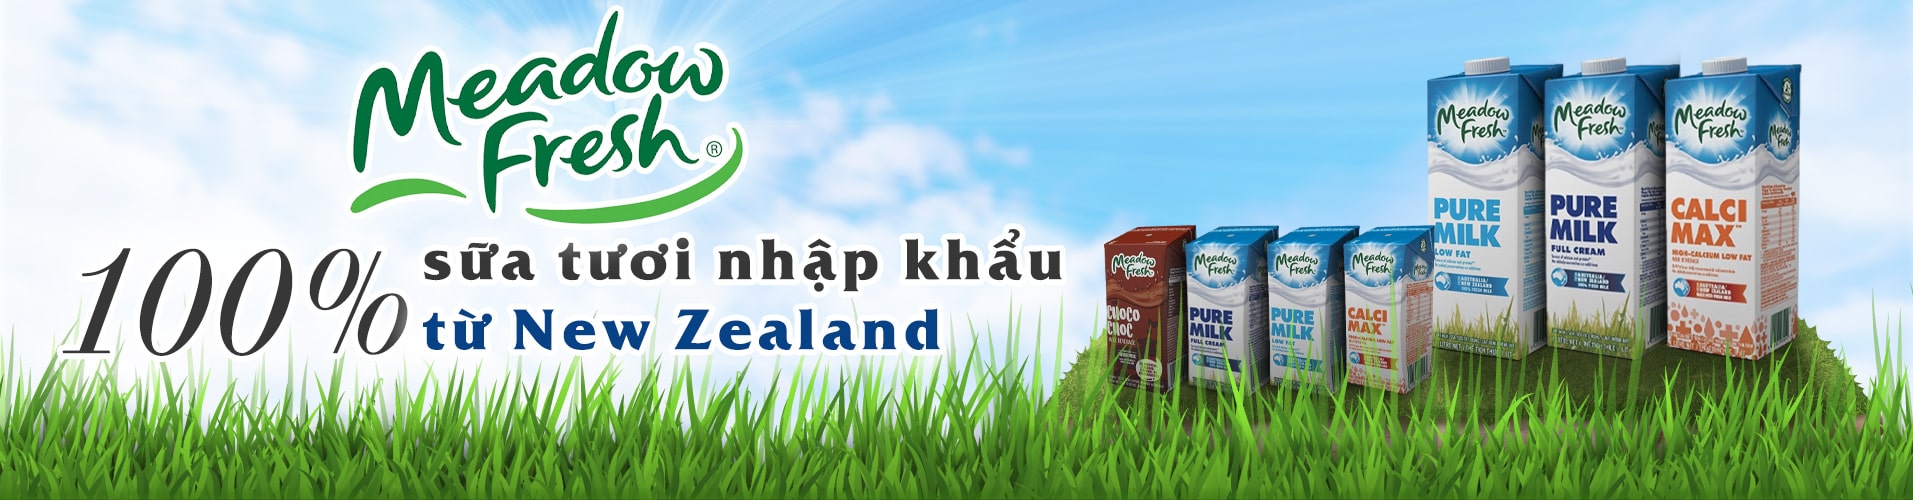 Meadow Fresh - Sữa tươi nhập khẩu từ New Zealand